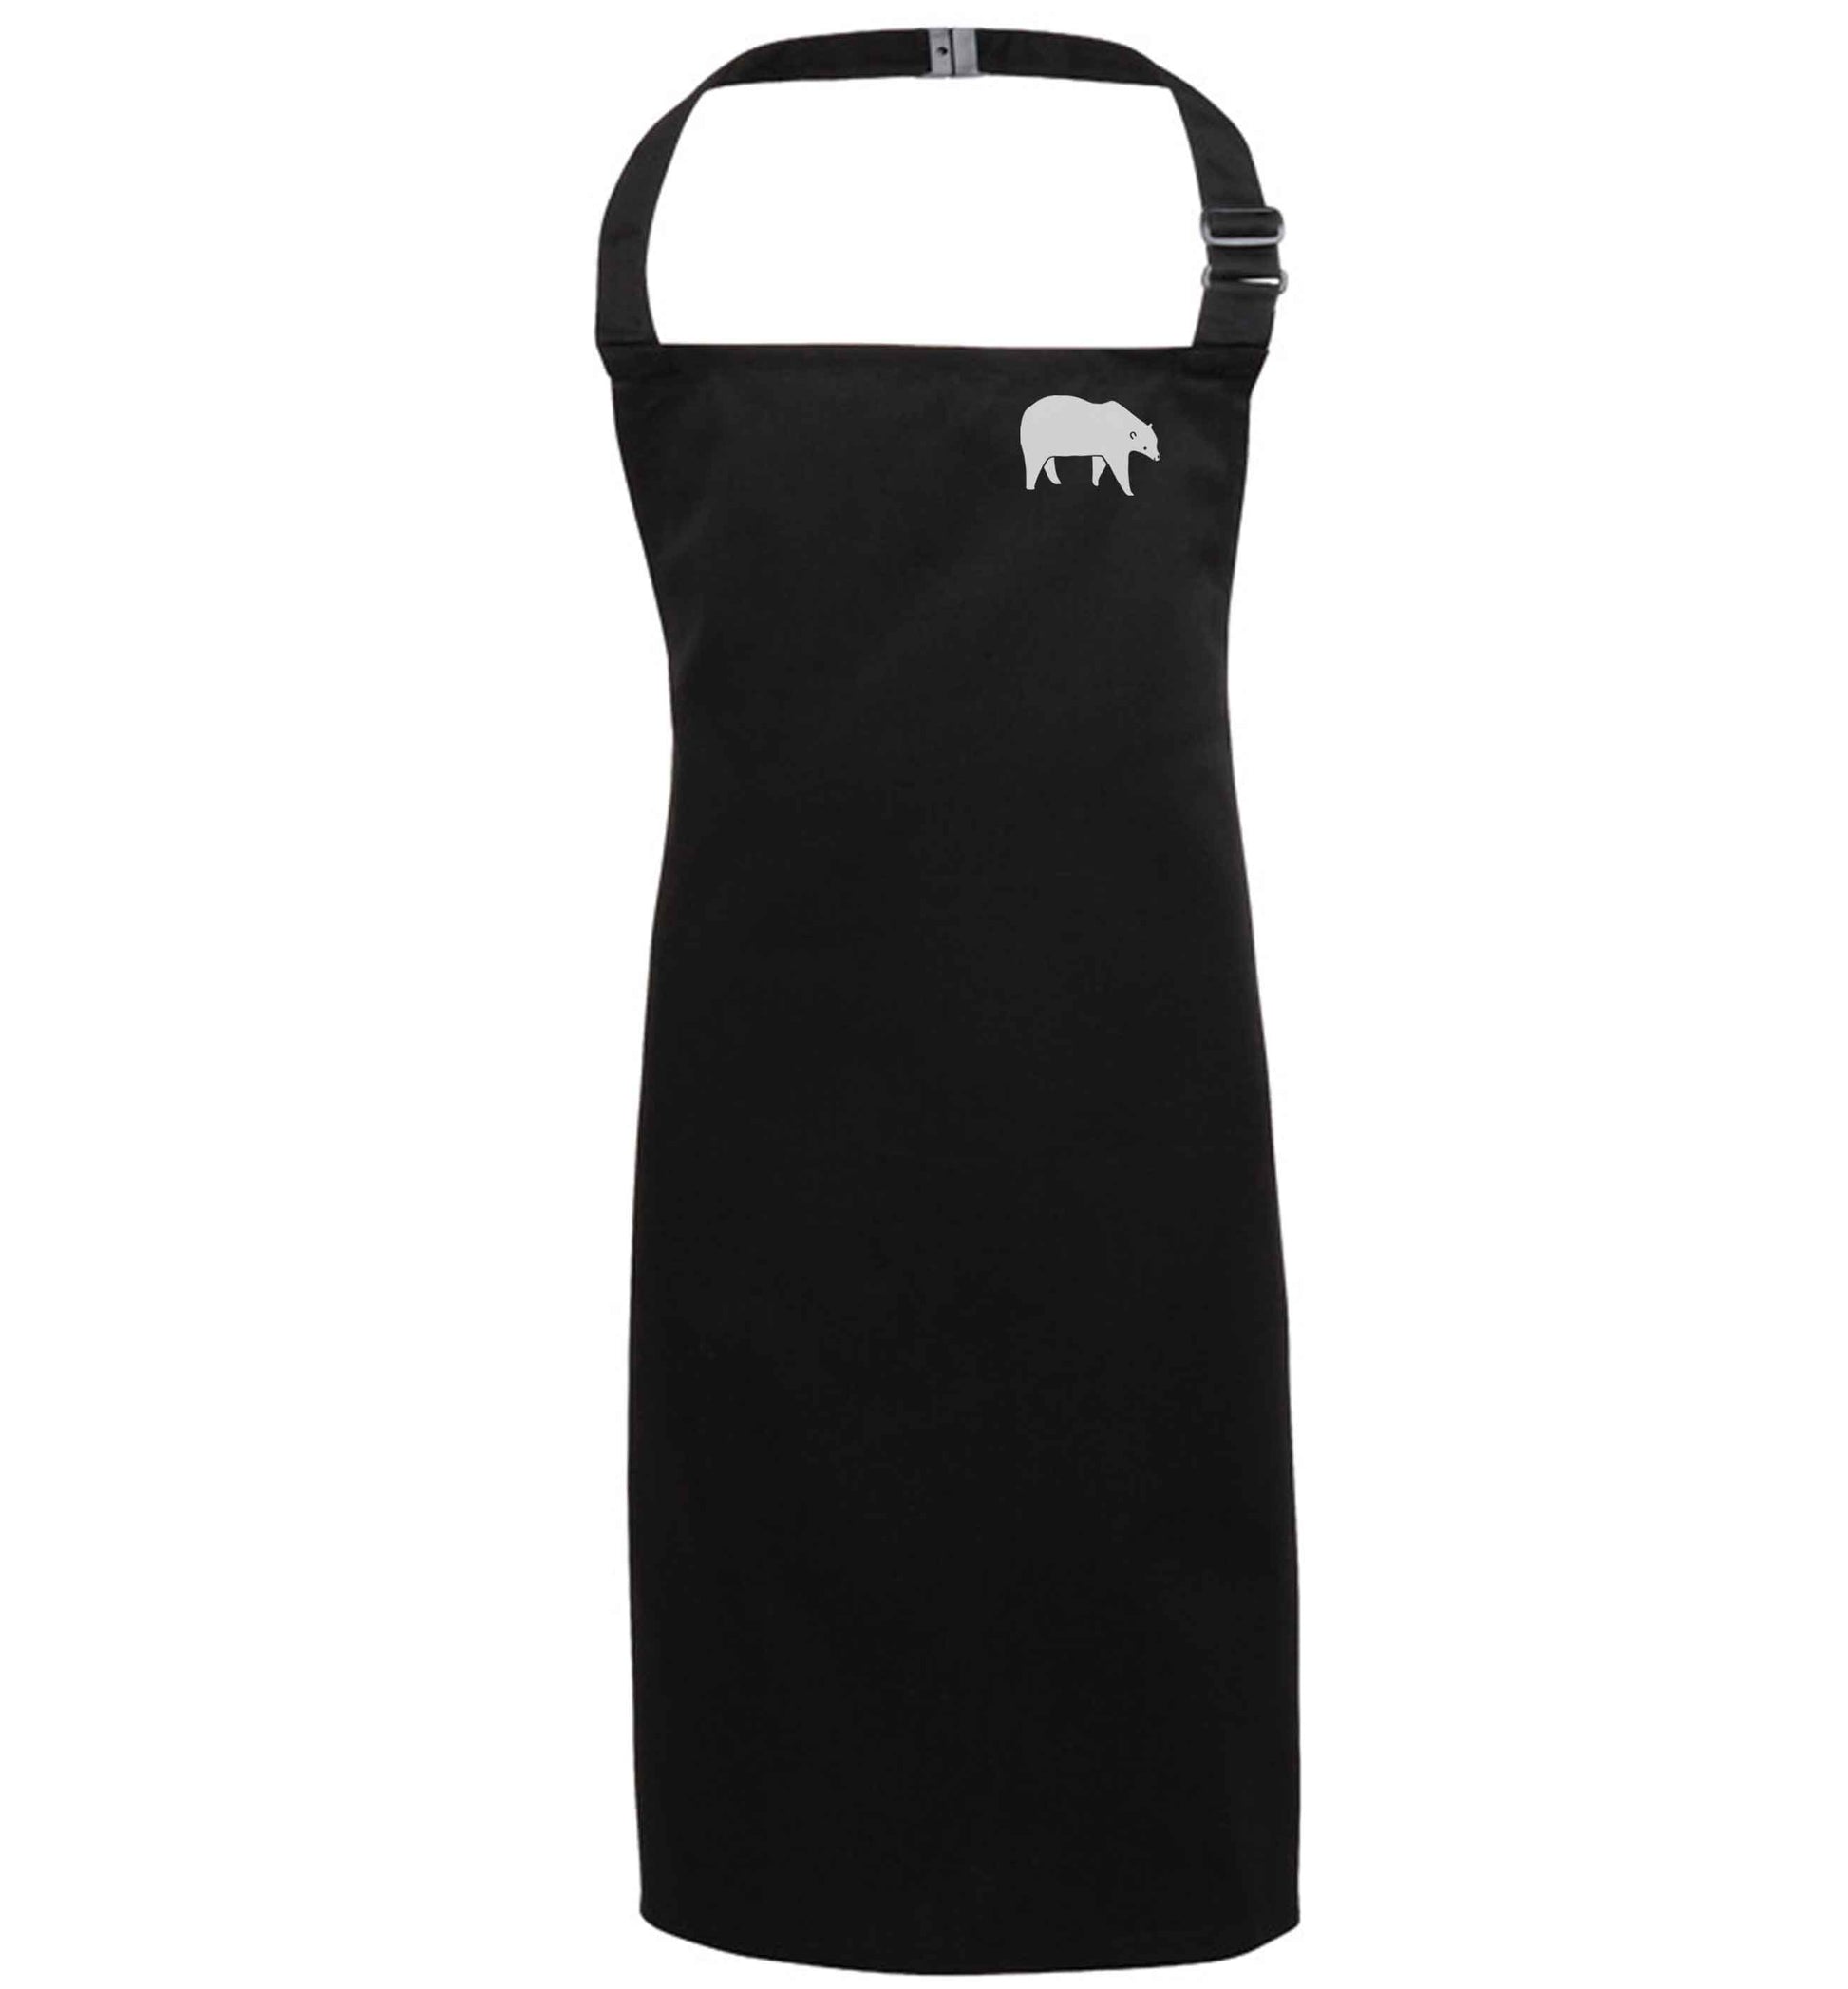 Polar Bear Kit black apron 7-10 years